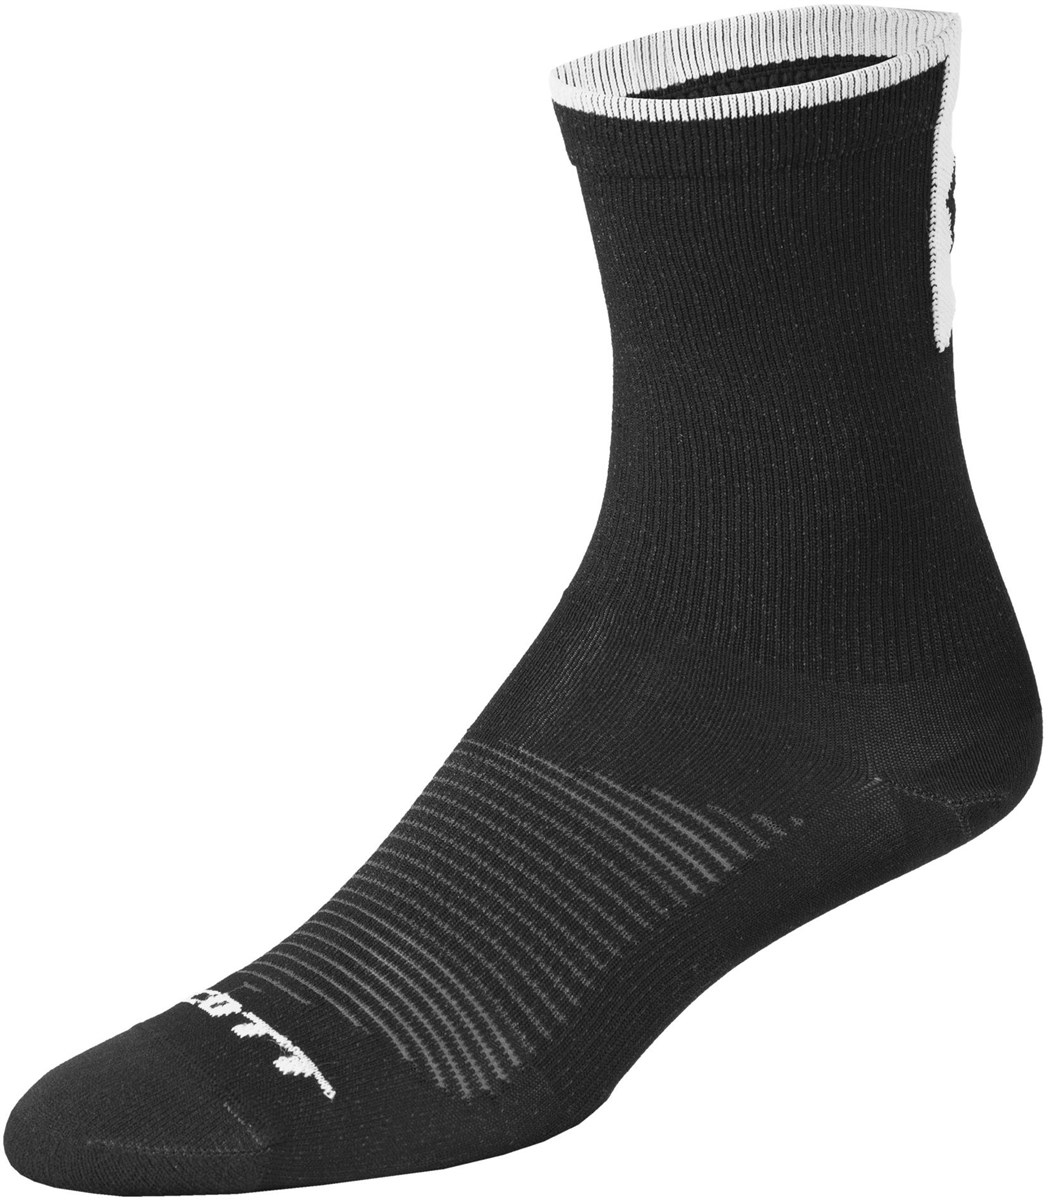 Scott Road Long Socks product image